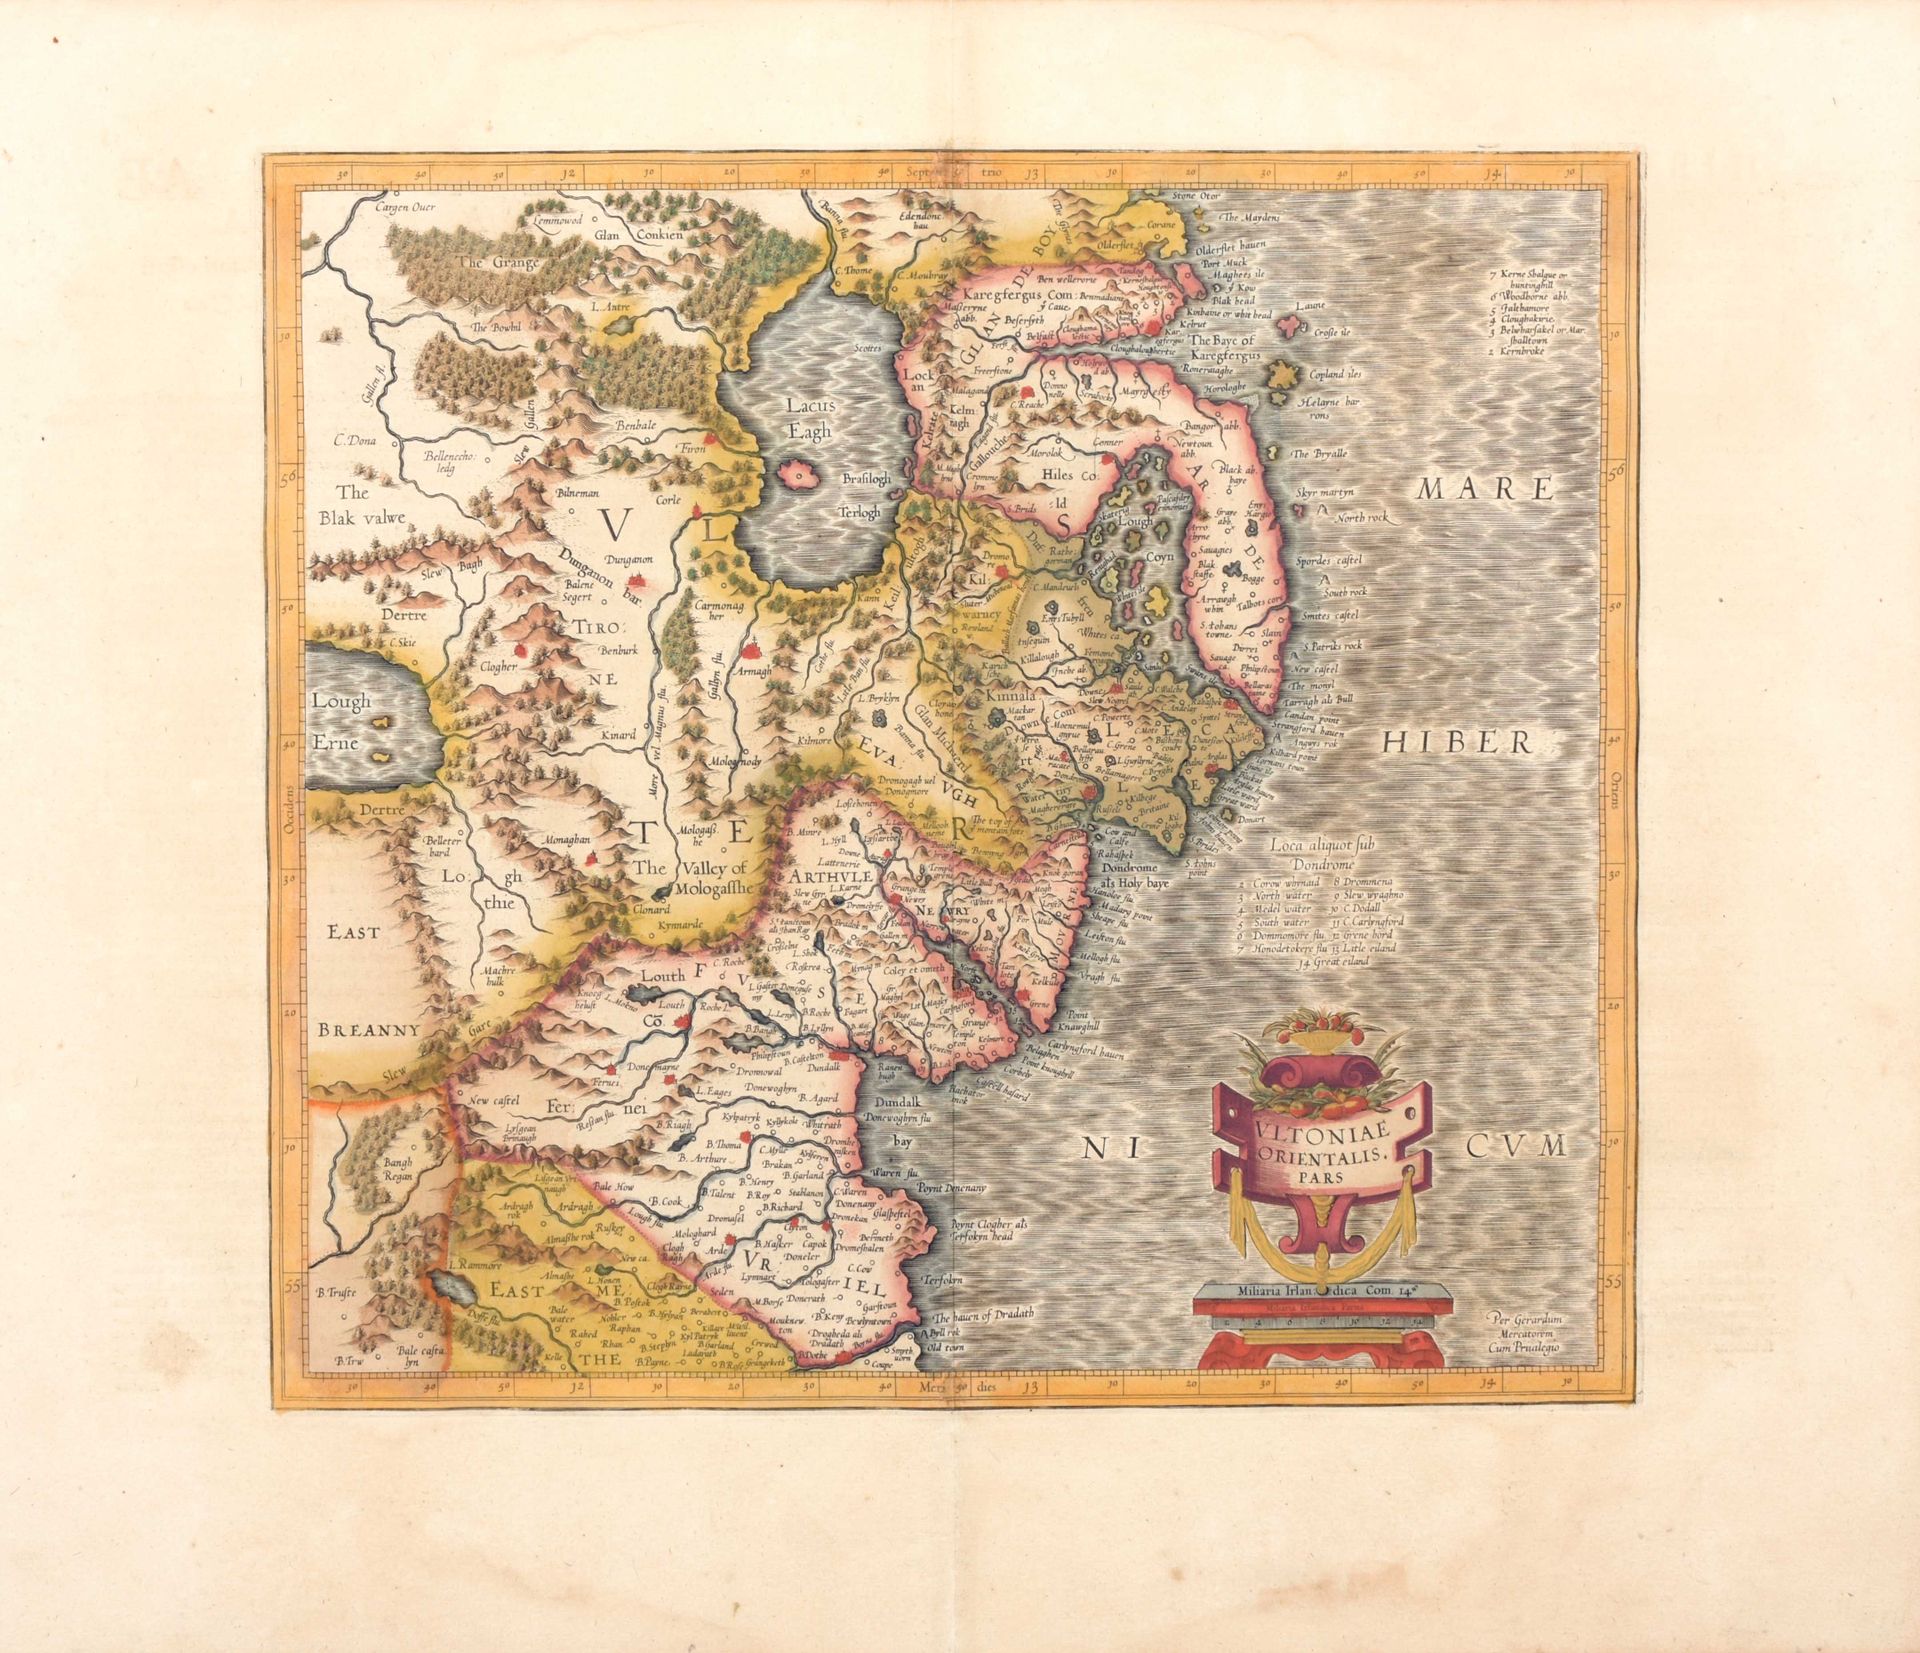 [NORTHERN IRELAND] Ultoniae Orientalis Pars

Mappa originale a mano (35 x 38 cm)&hellip;